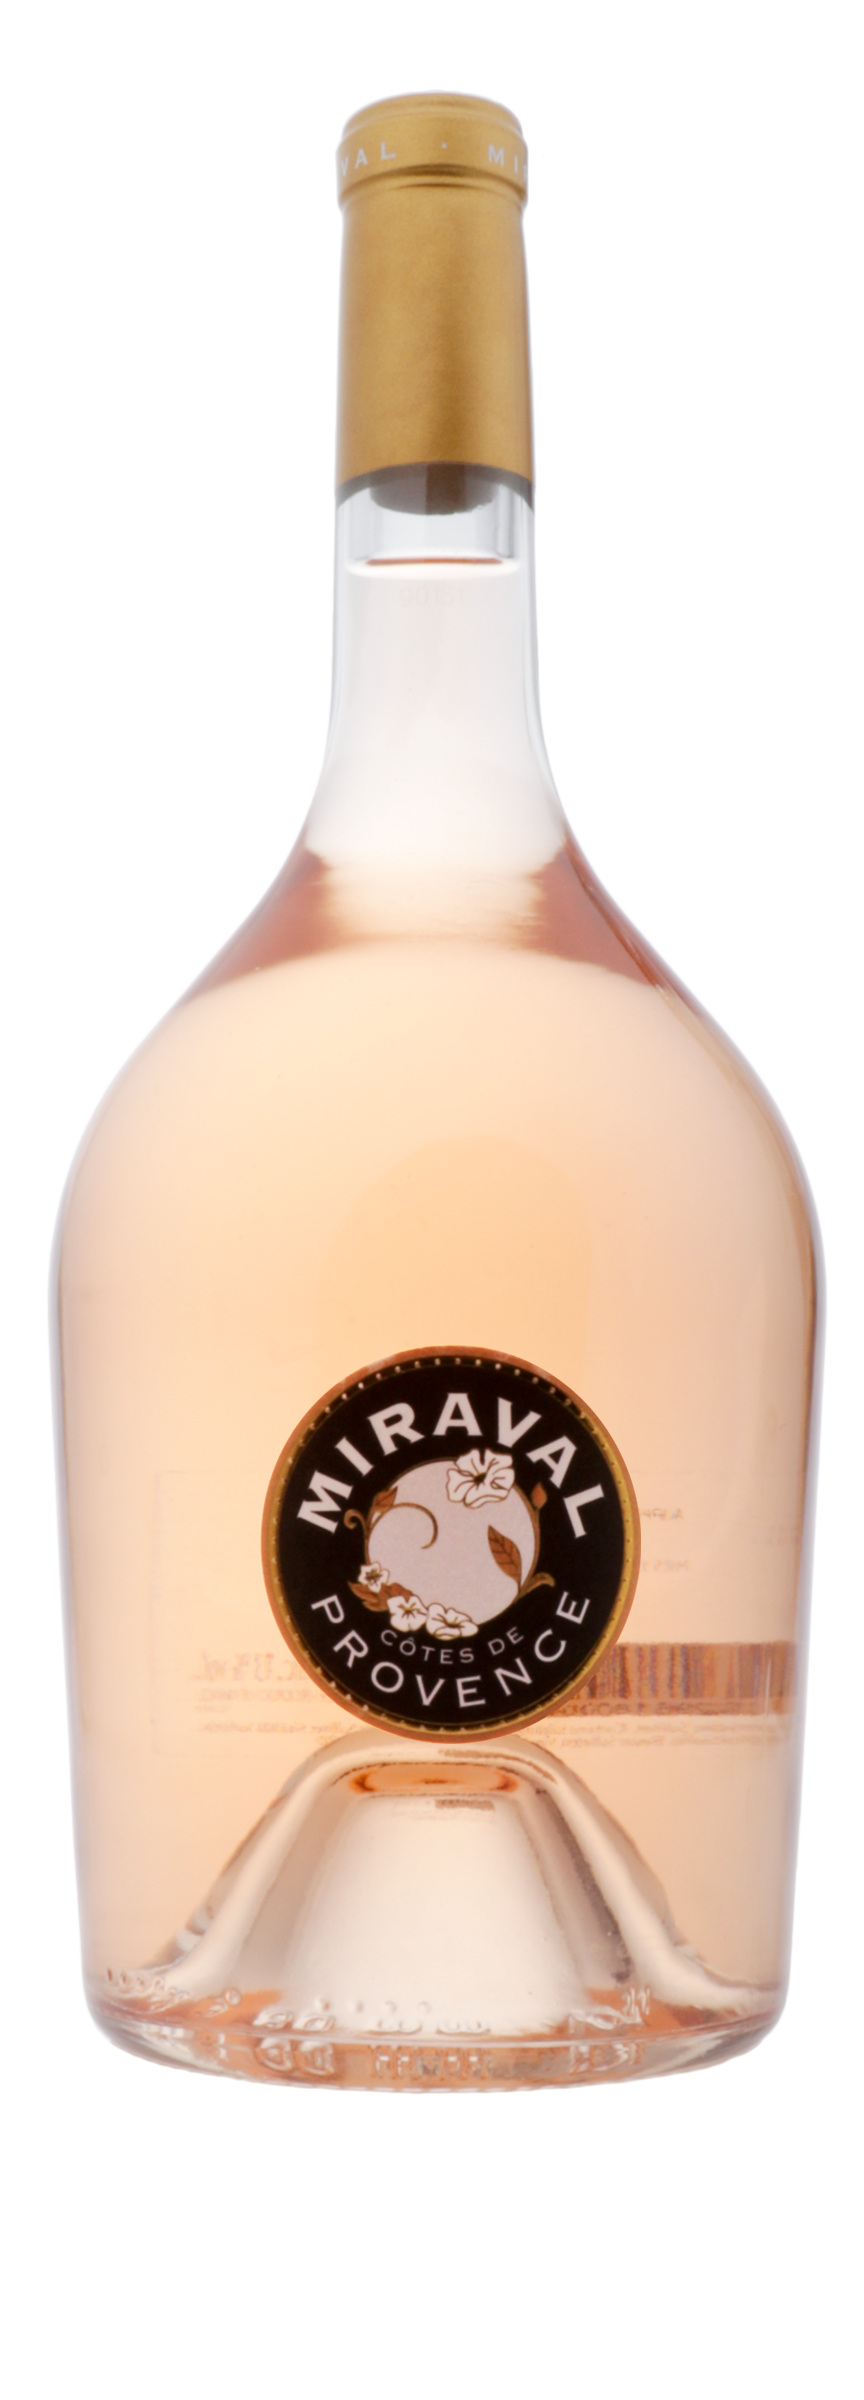 Miraval Côtes de Provence rosé AOC